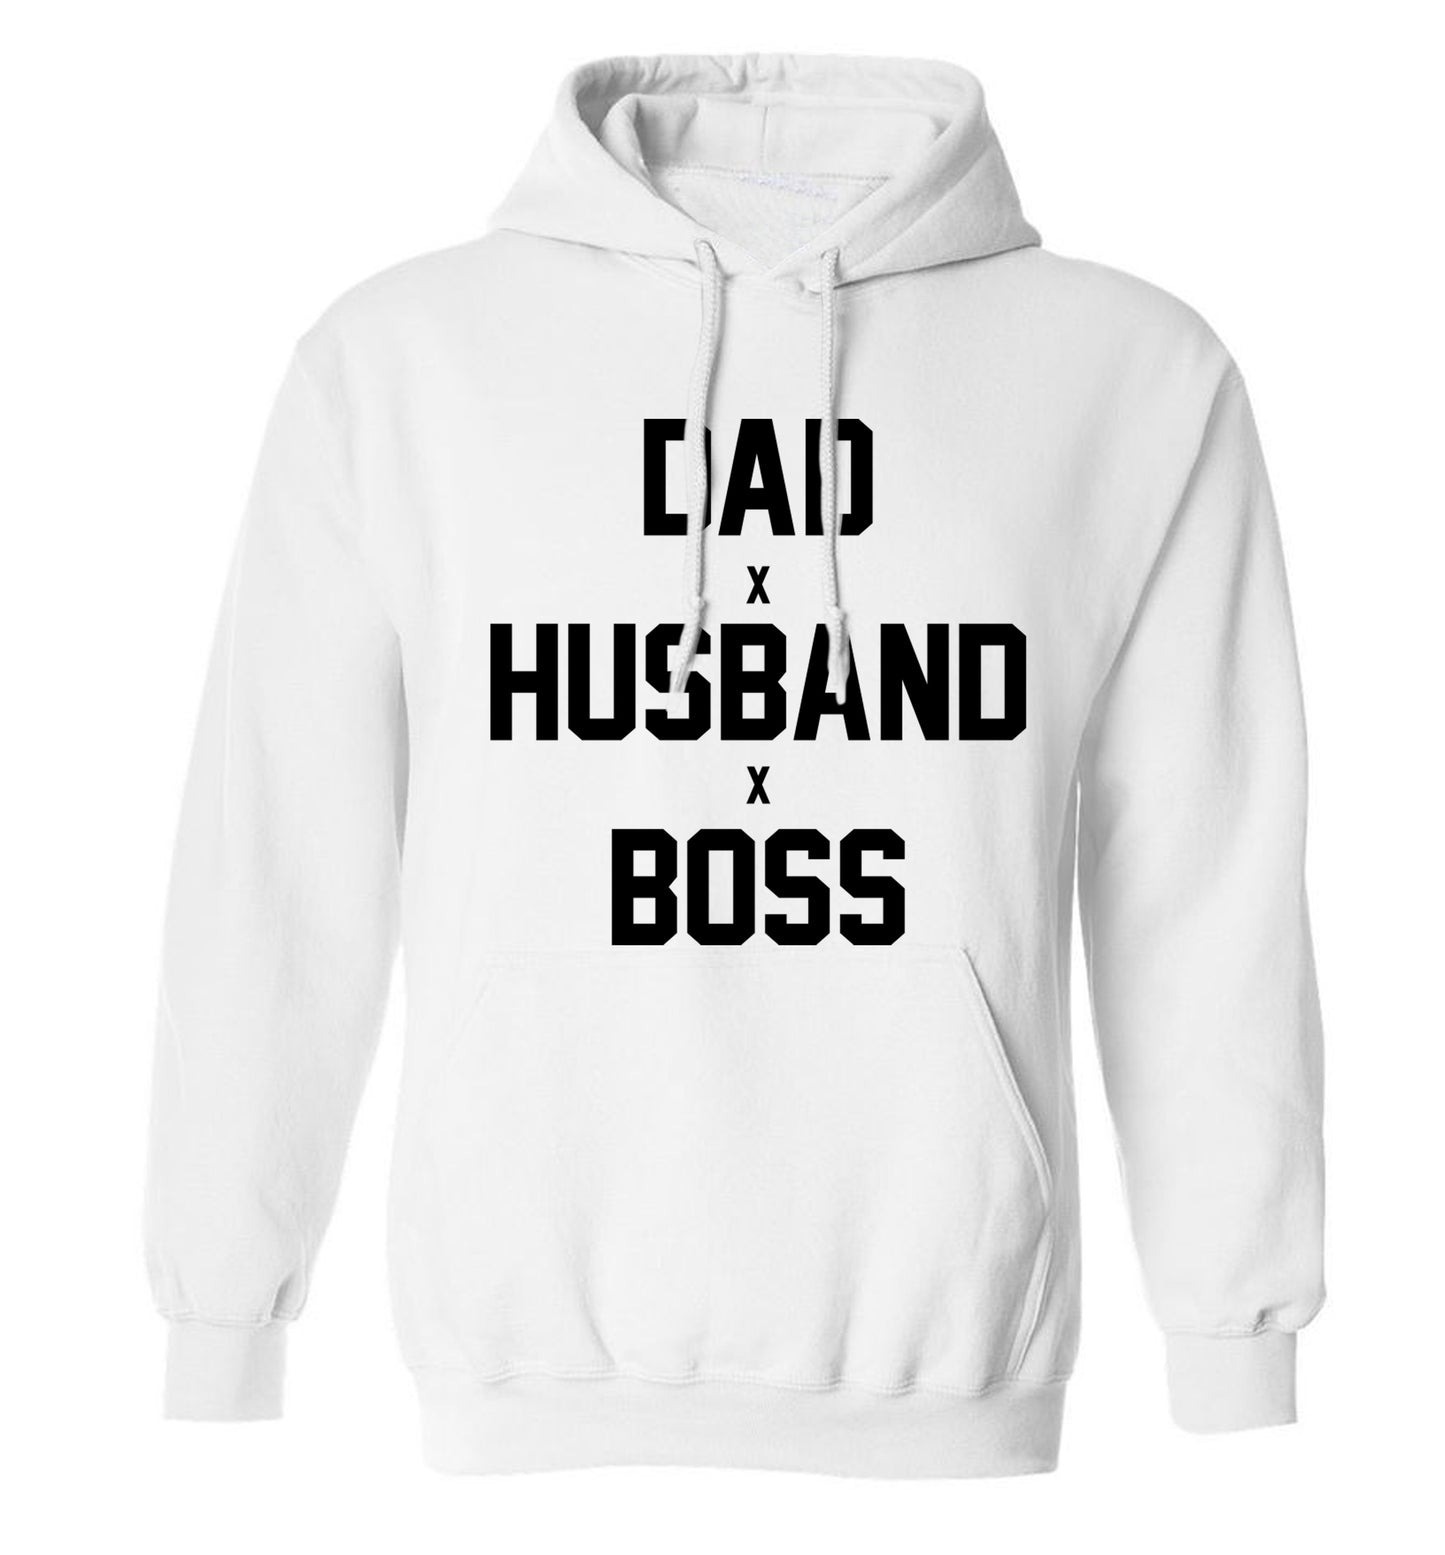 Dad husband boss adults unisex white hoodie 2XL